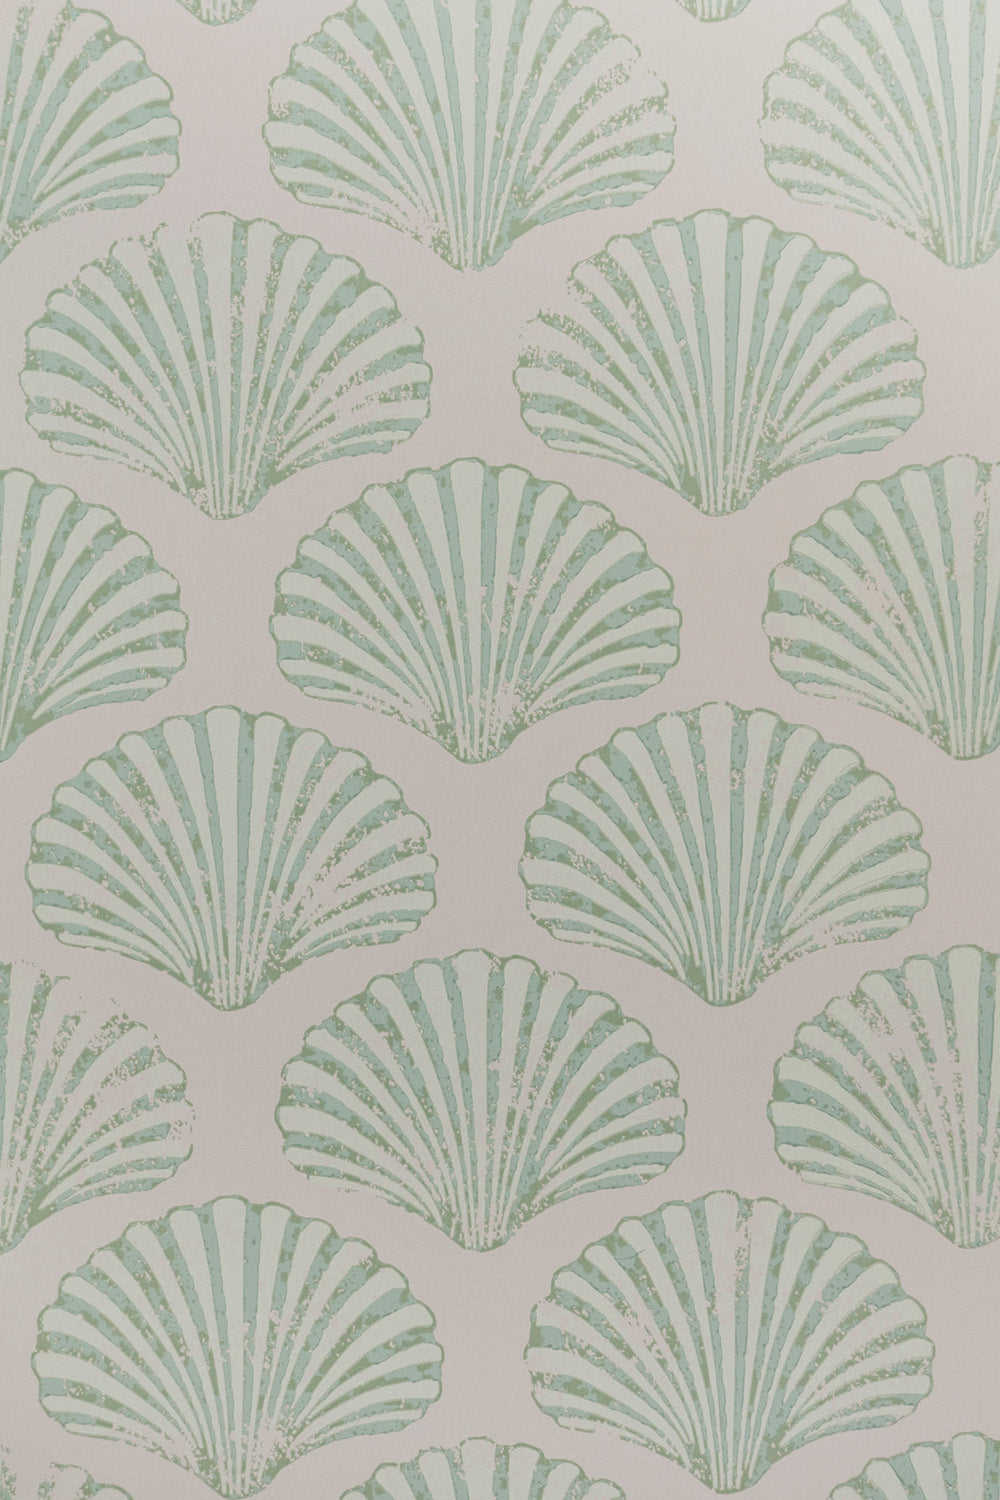 Scallop Shell Nursery Room Wallpaper 5 - Green